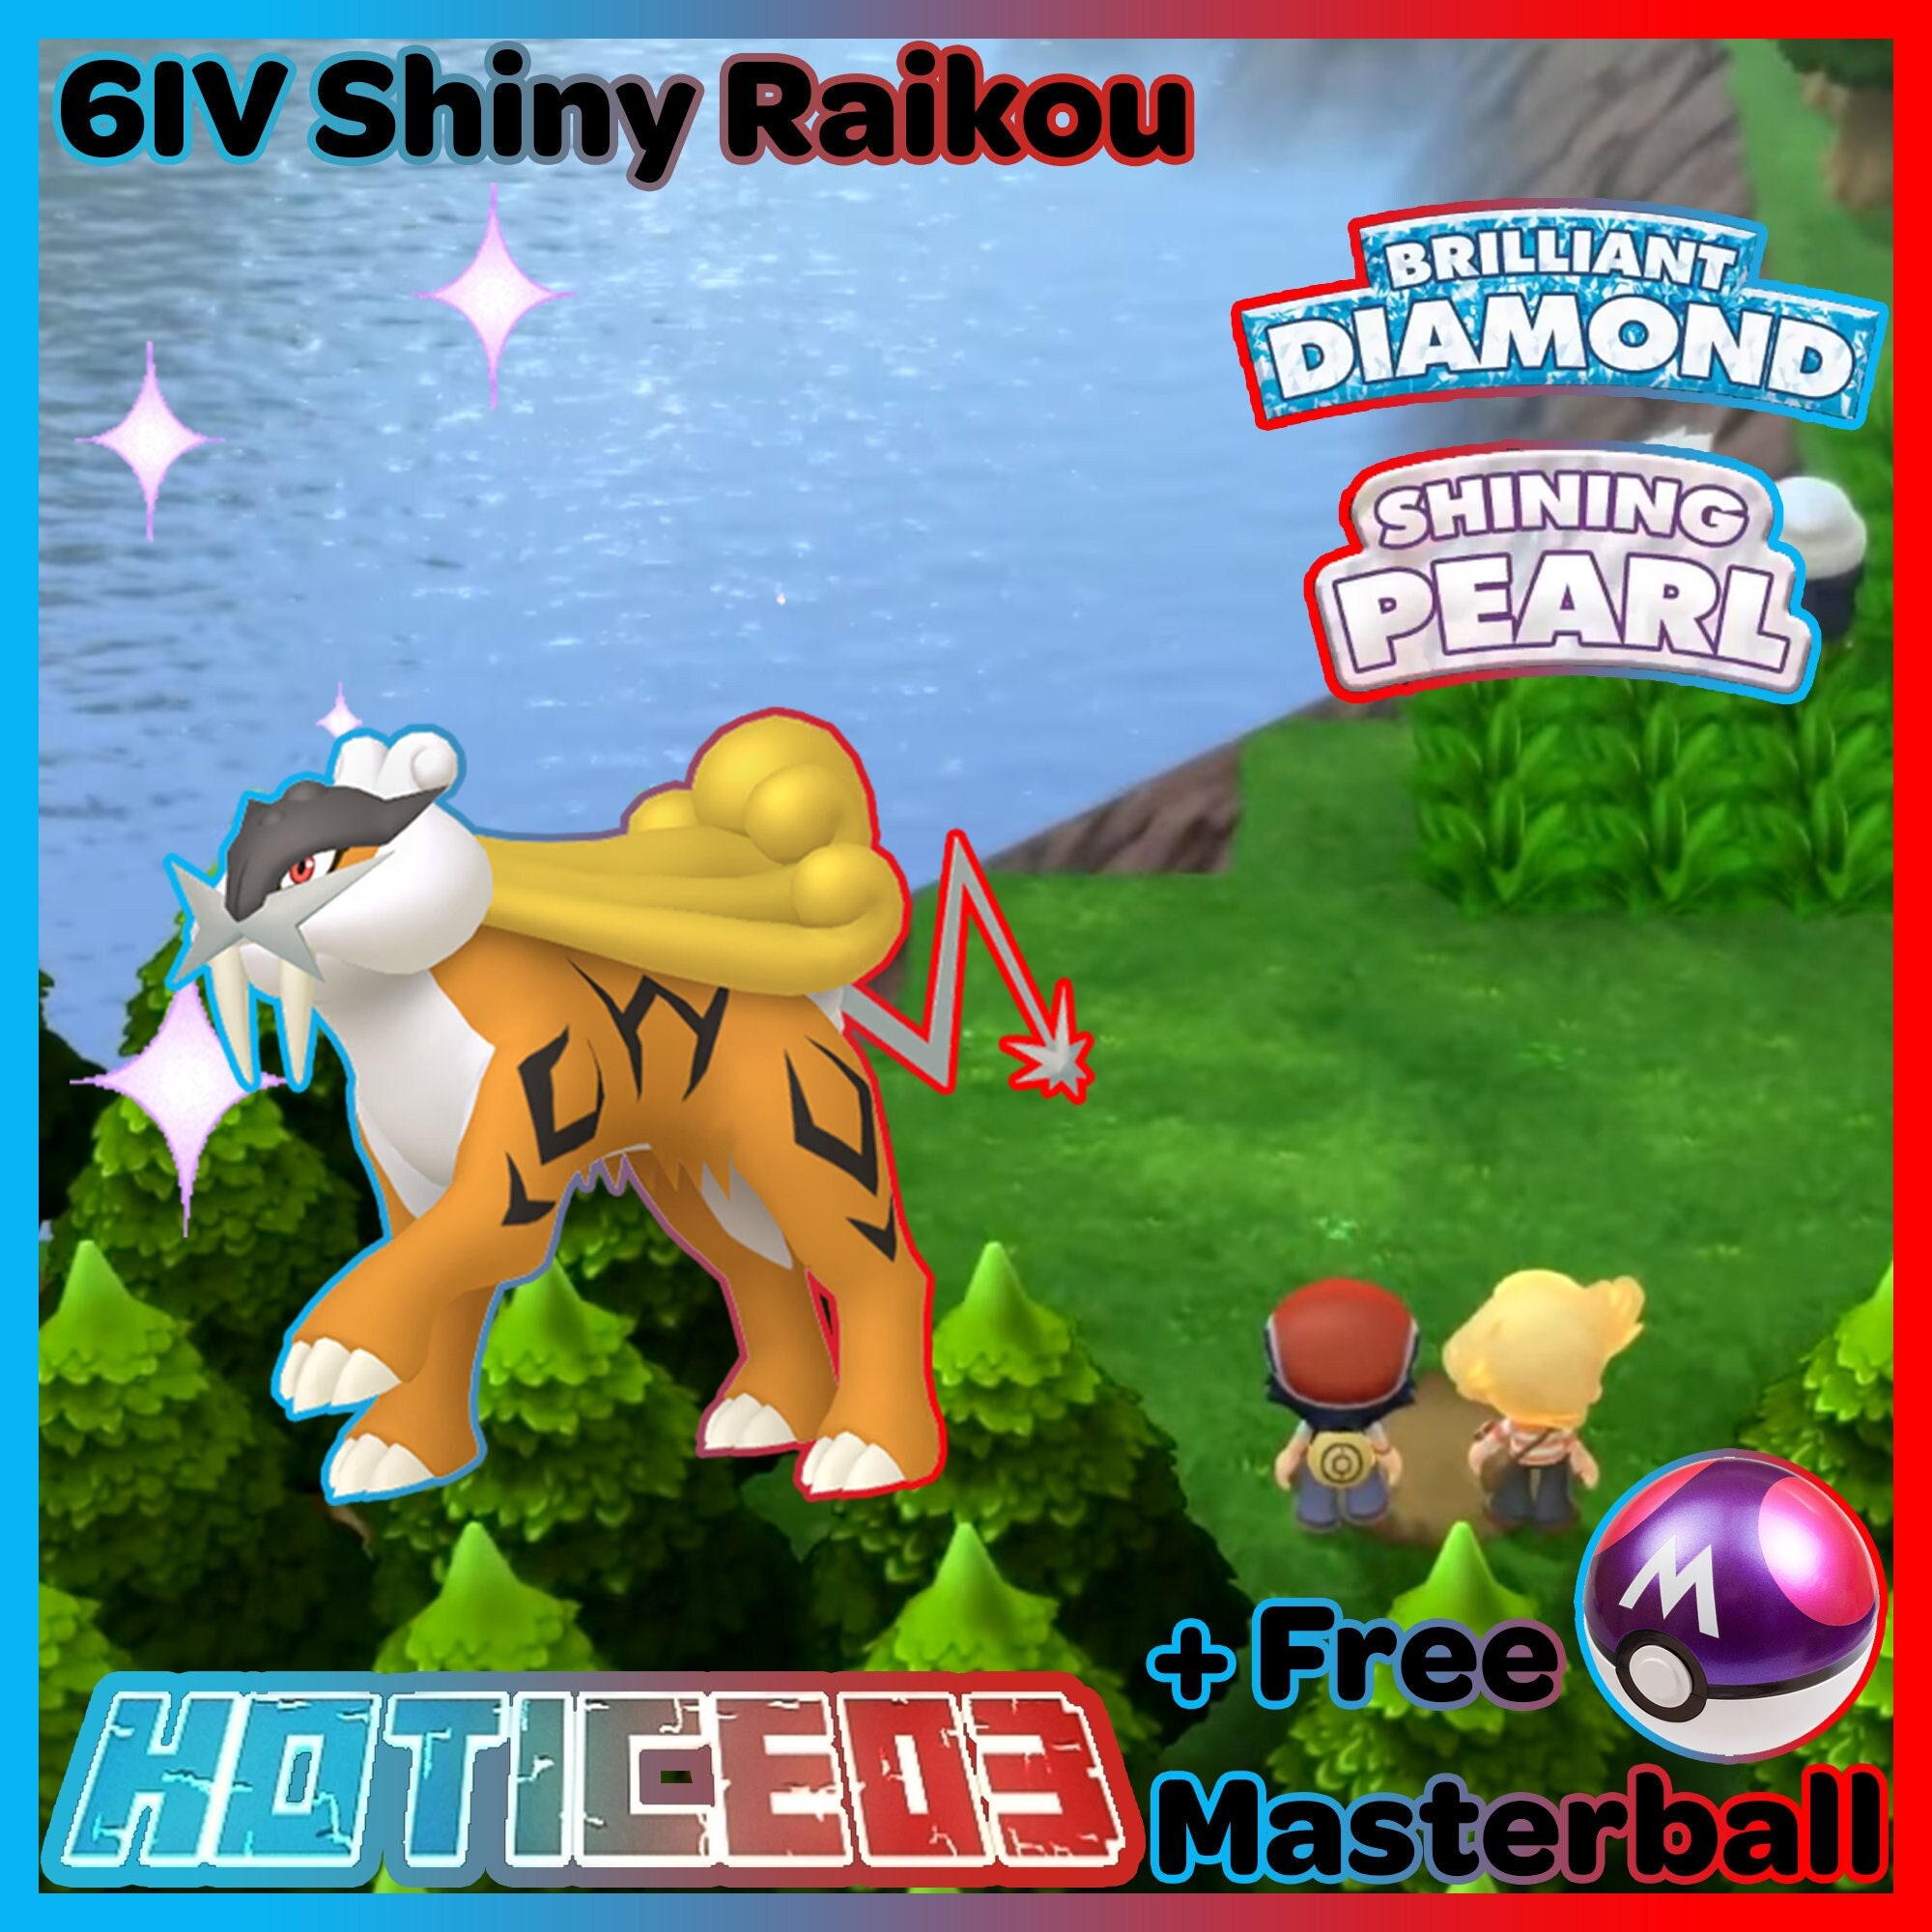 6IV Shiny Raikou Pokemon Brilliant Diamond Shining Pearl 